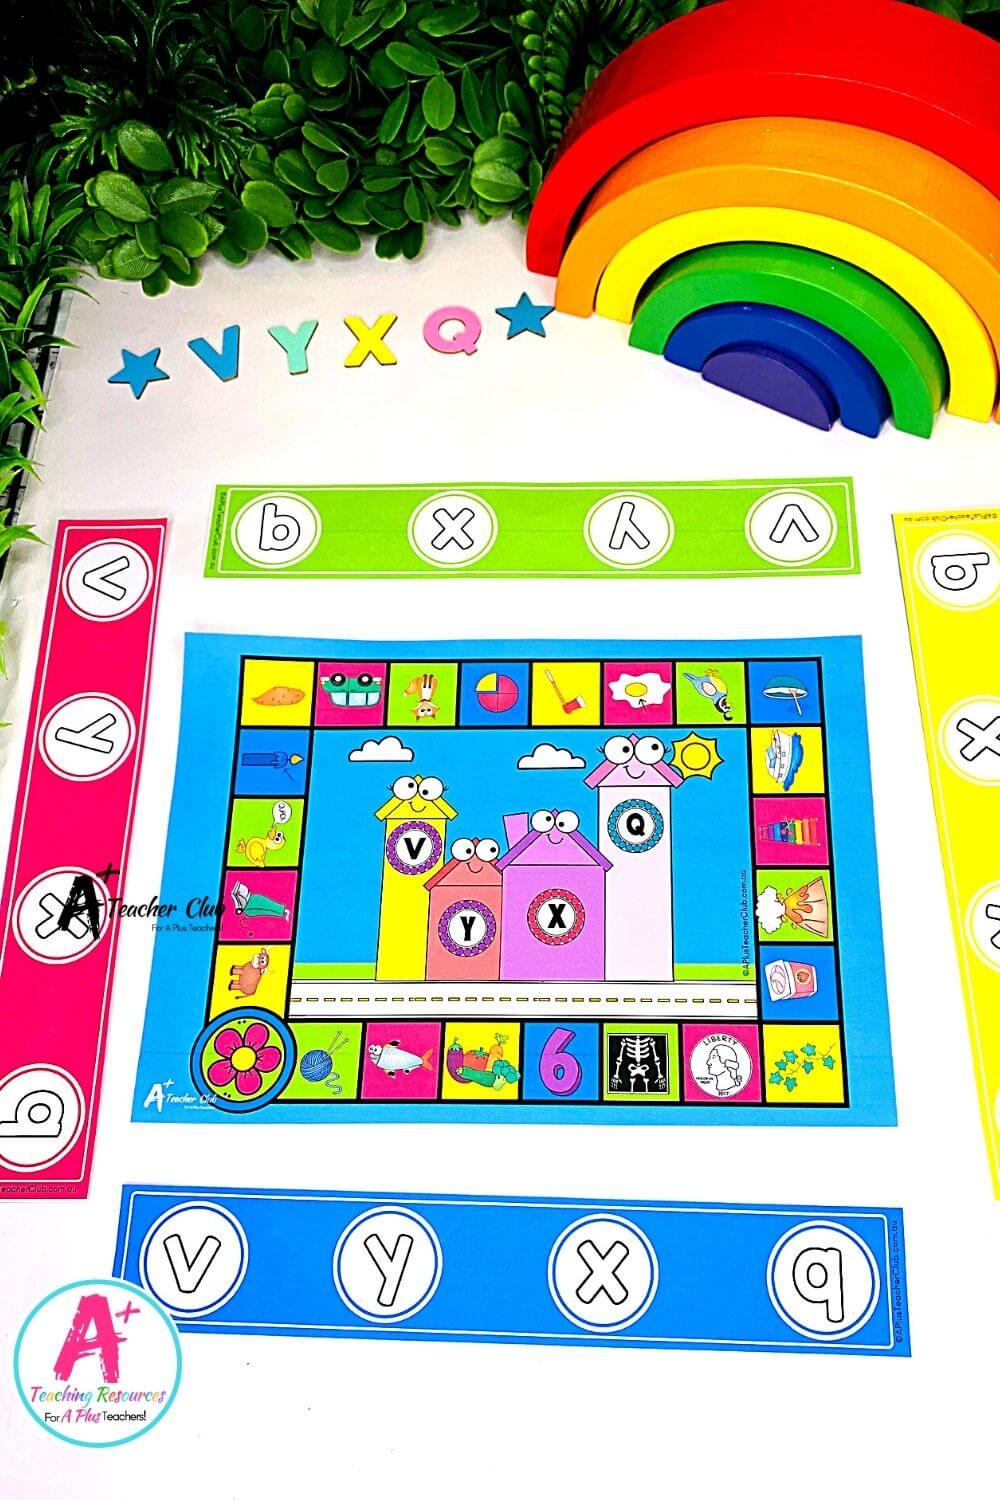 VYXQ Board Game